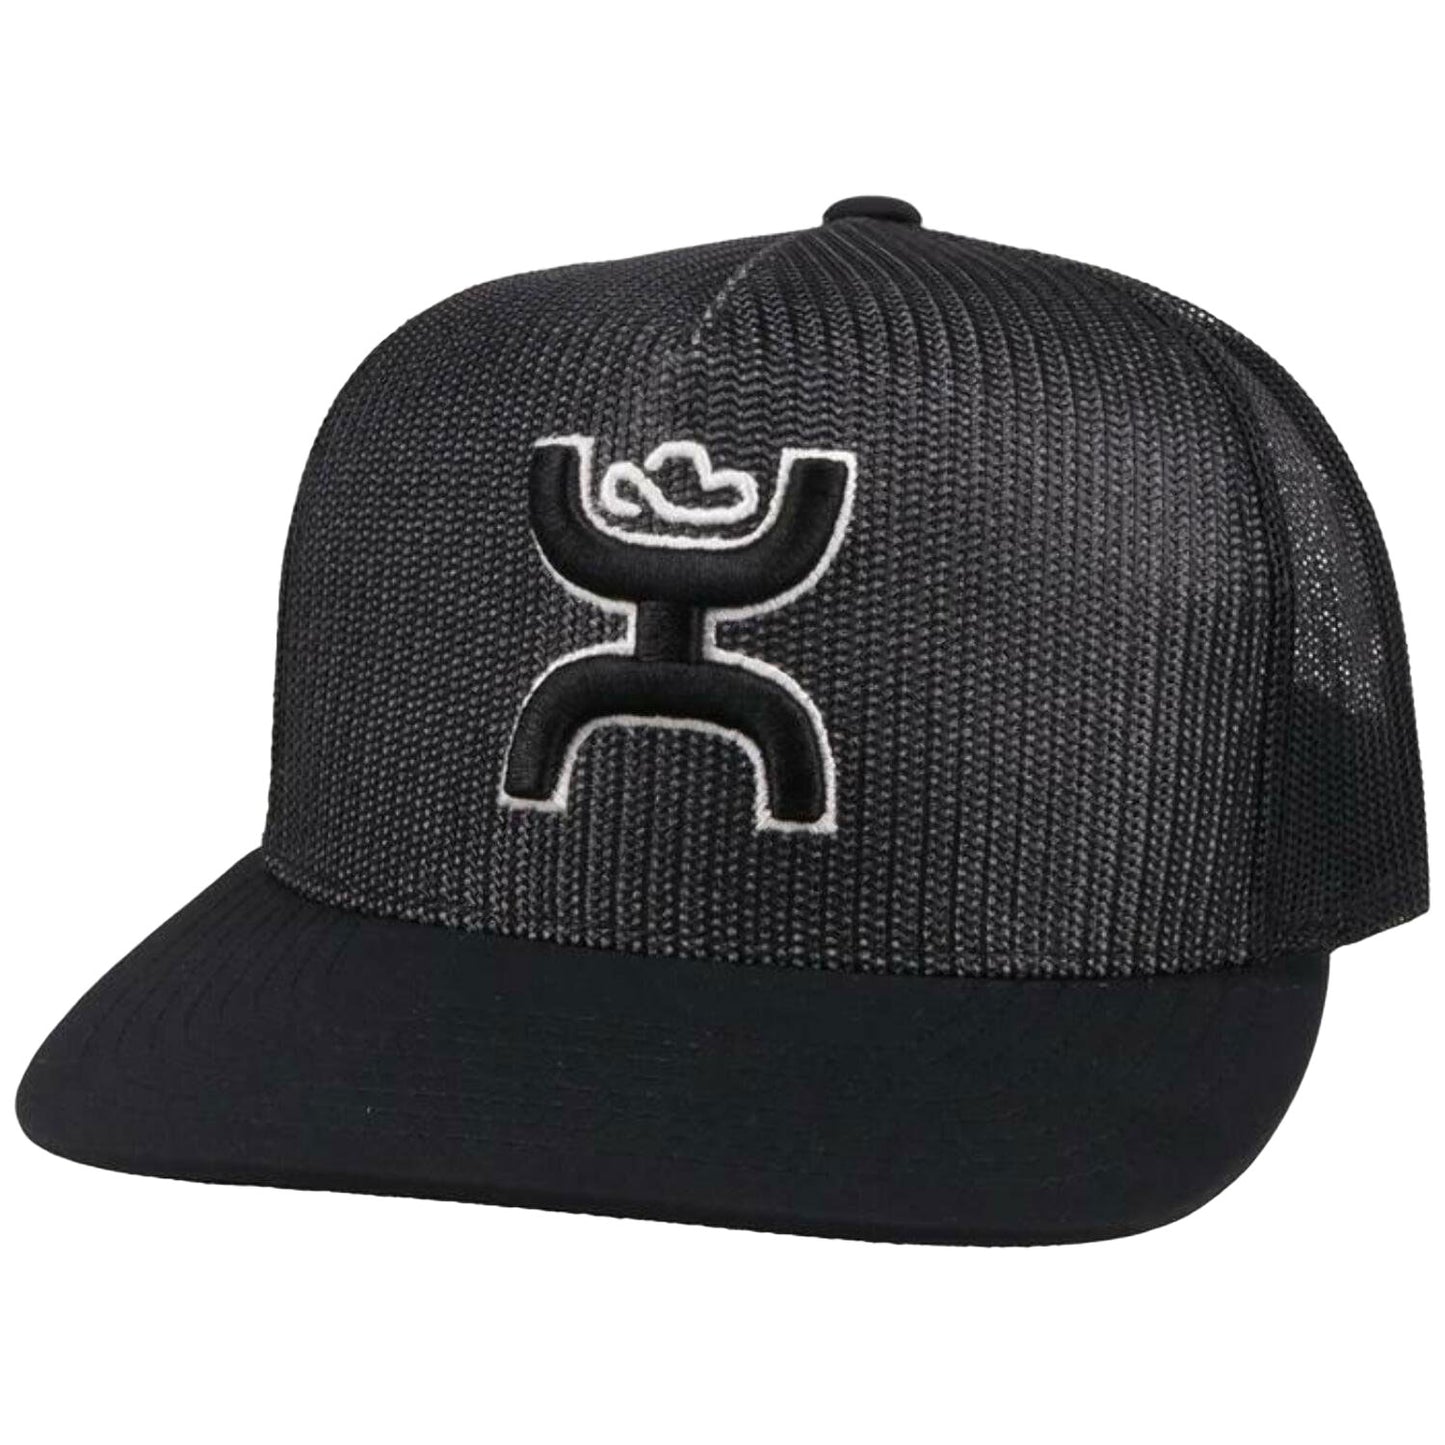 Hooey Brands Men's Classic Logo Allover Mesh Snap Back Cap